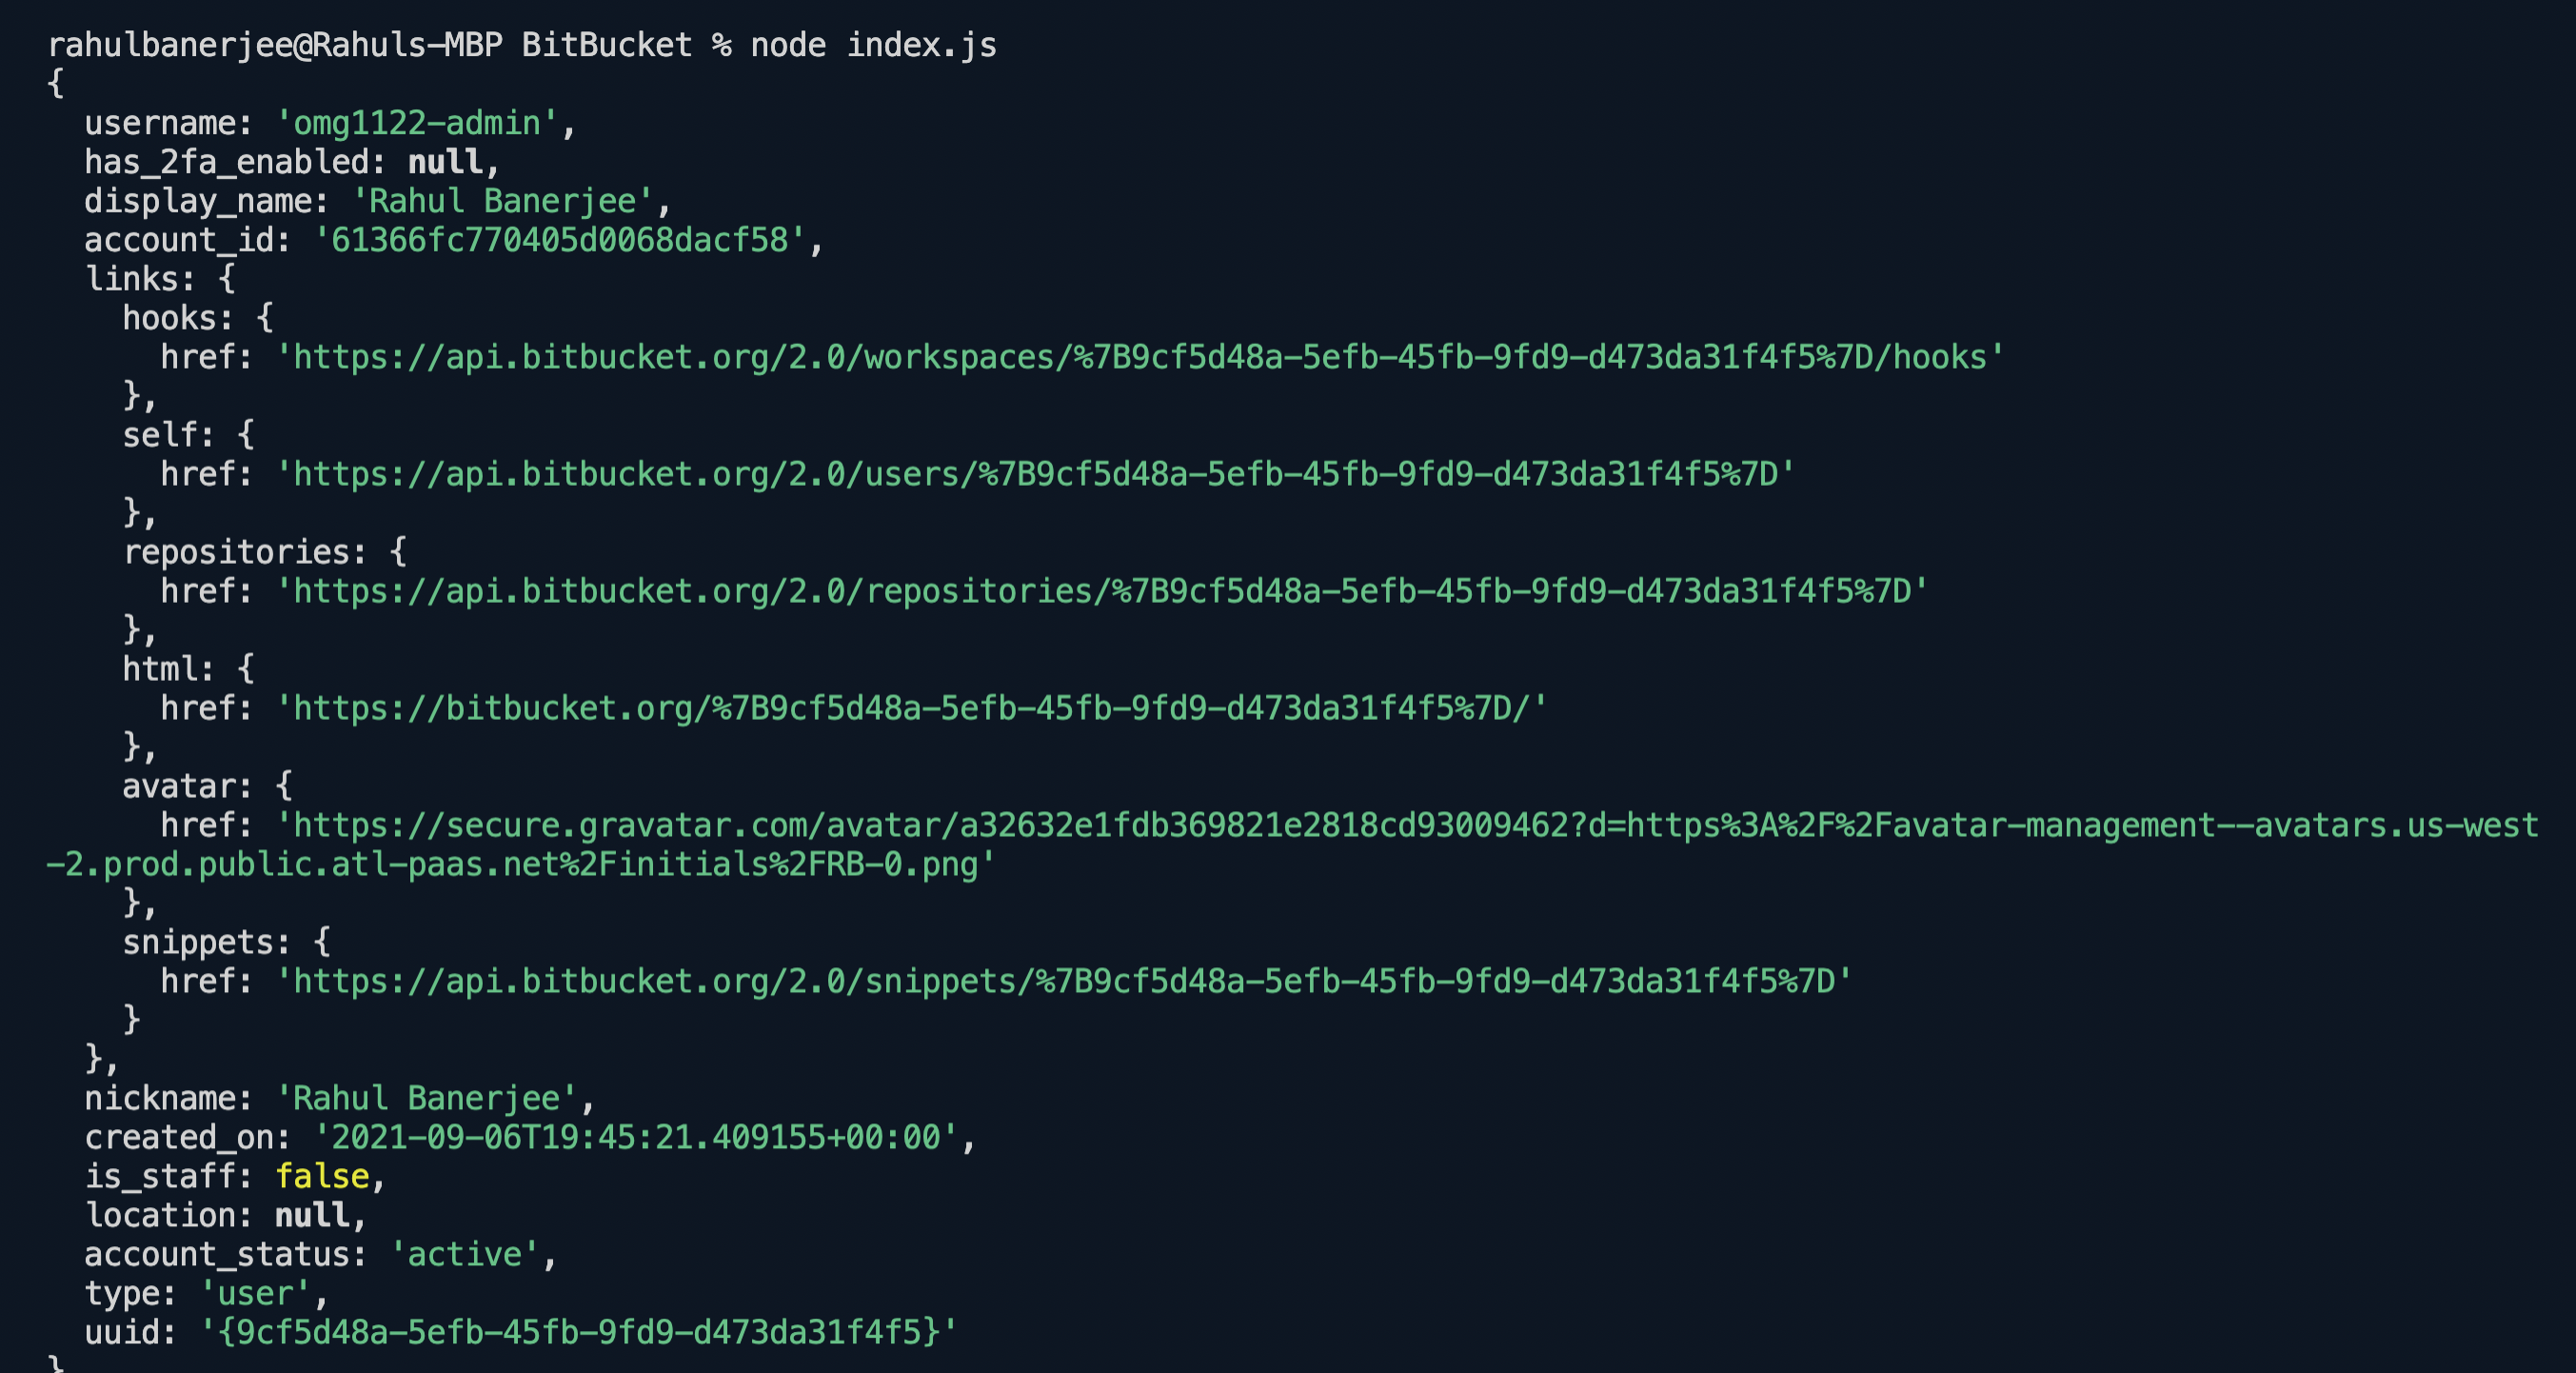 A screenshot of a sample request made to the Bitbucket API.